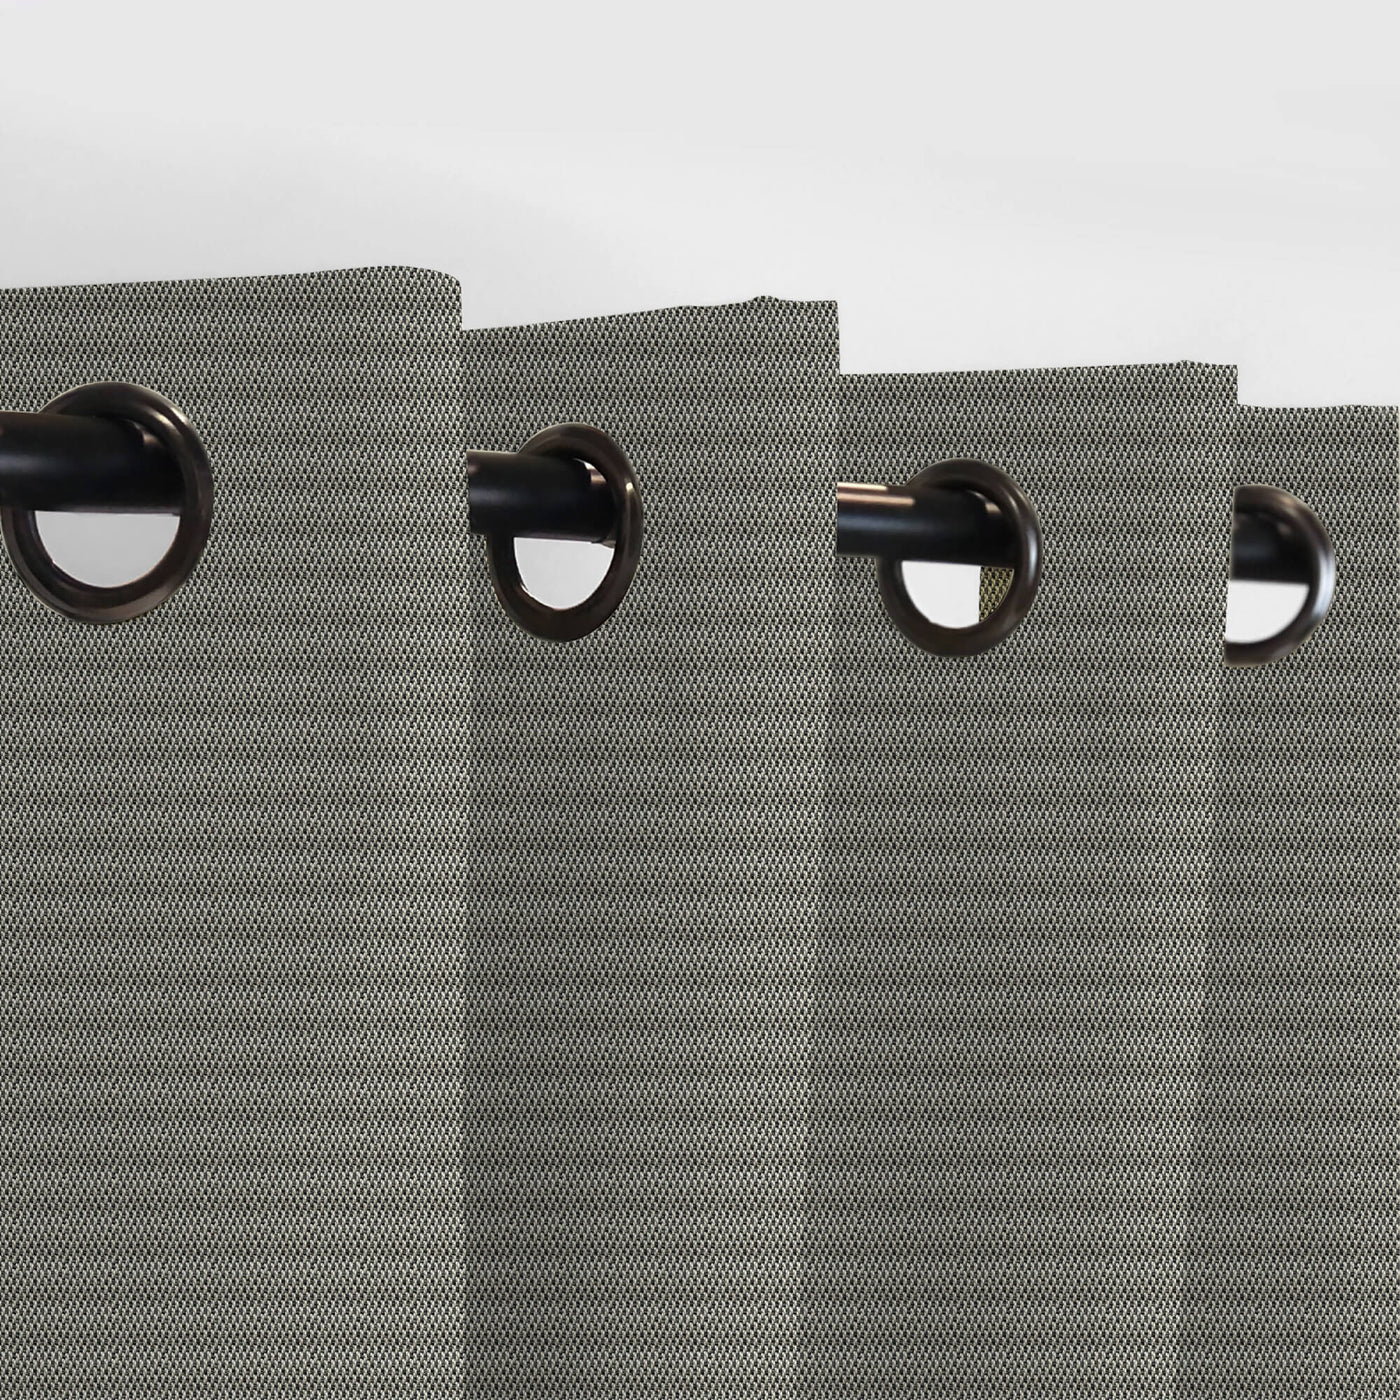 PENGI Outdoor Curtains Waterproof - Union Elephant Skin Gray